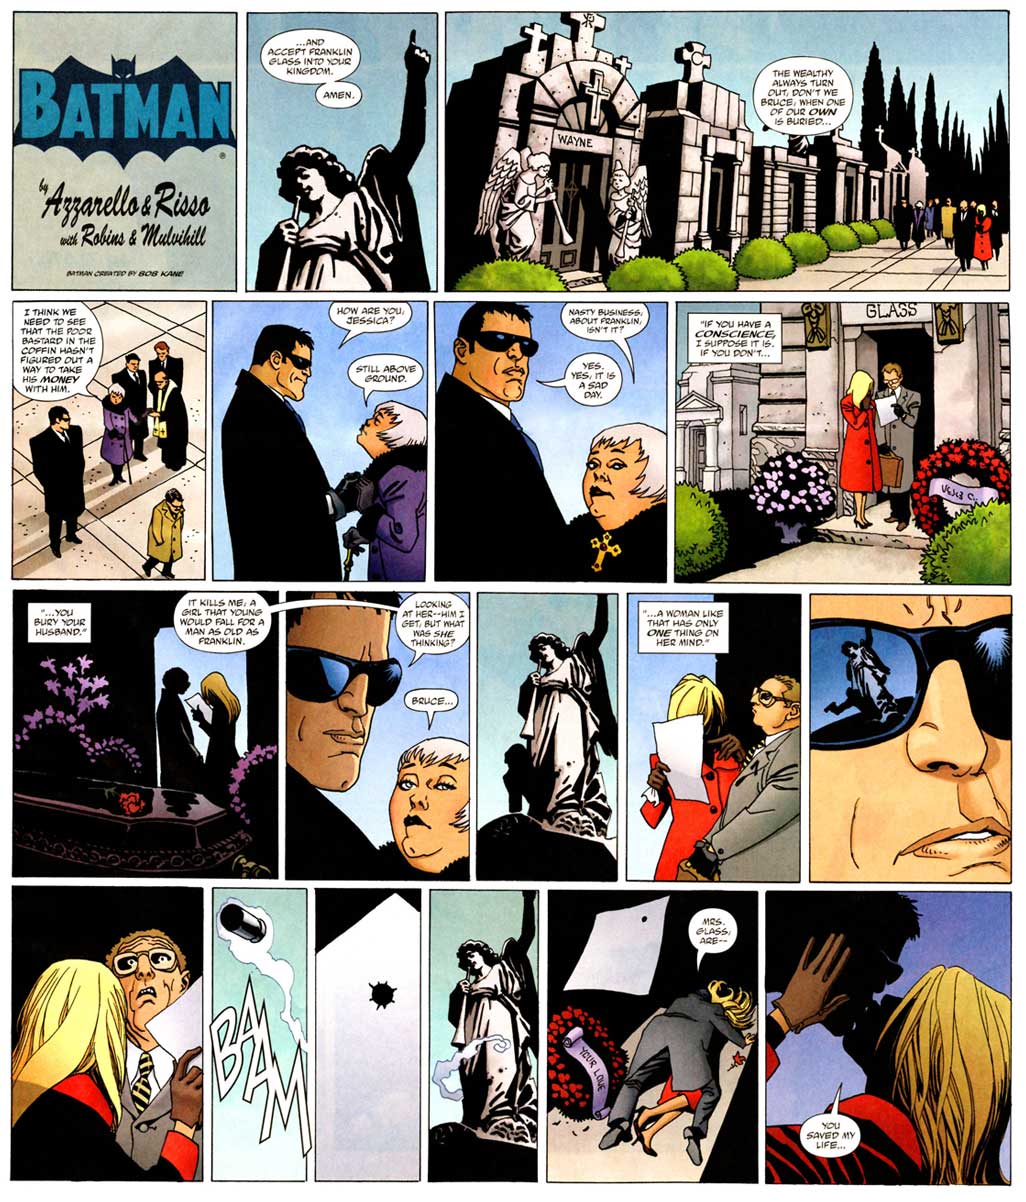 Wednesday-Comics-Page-02.jpg